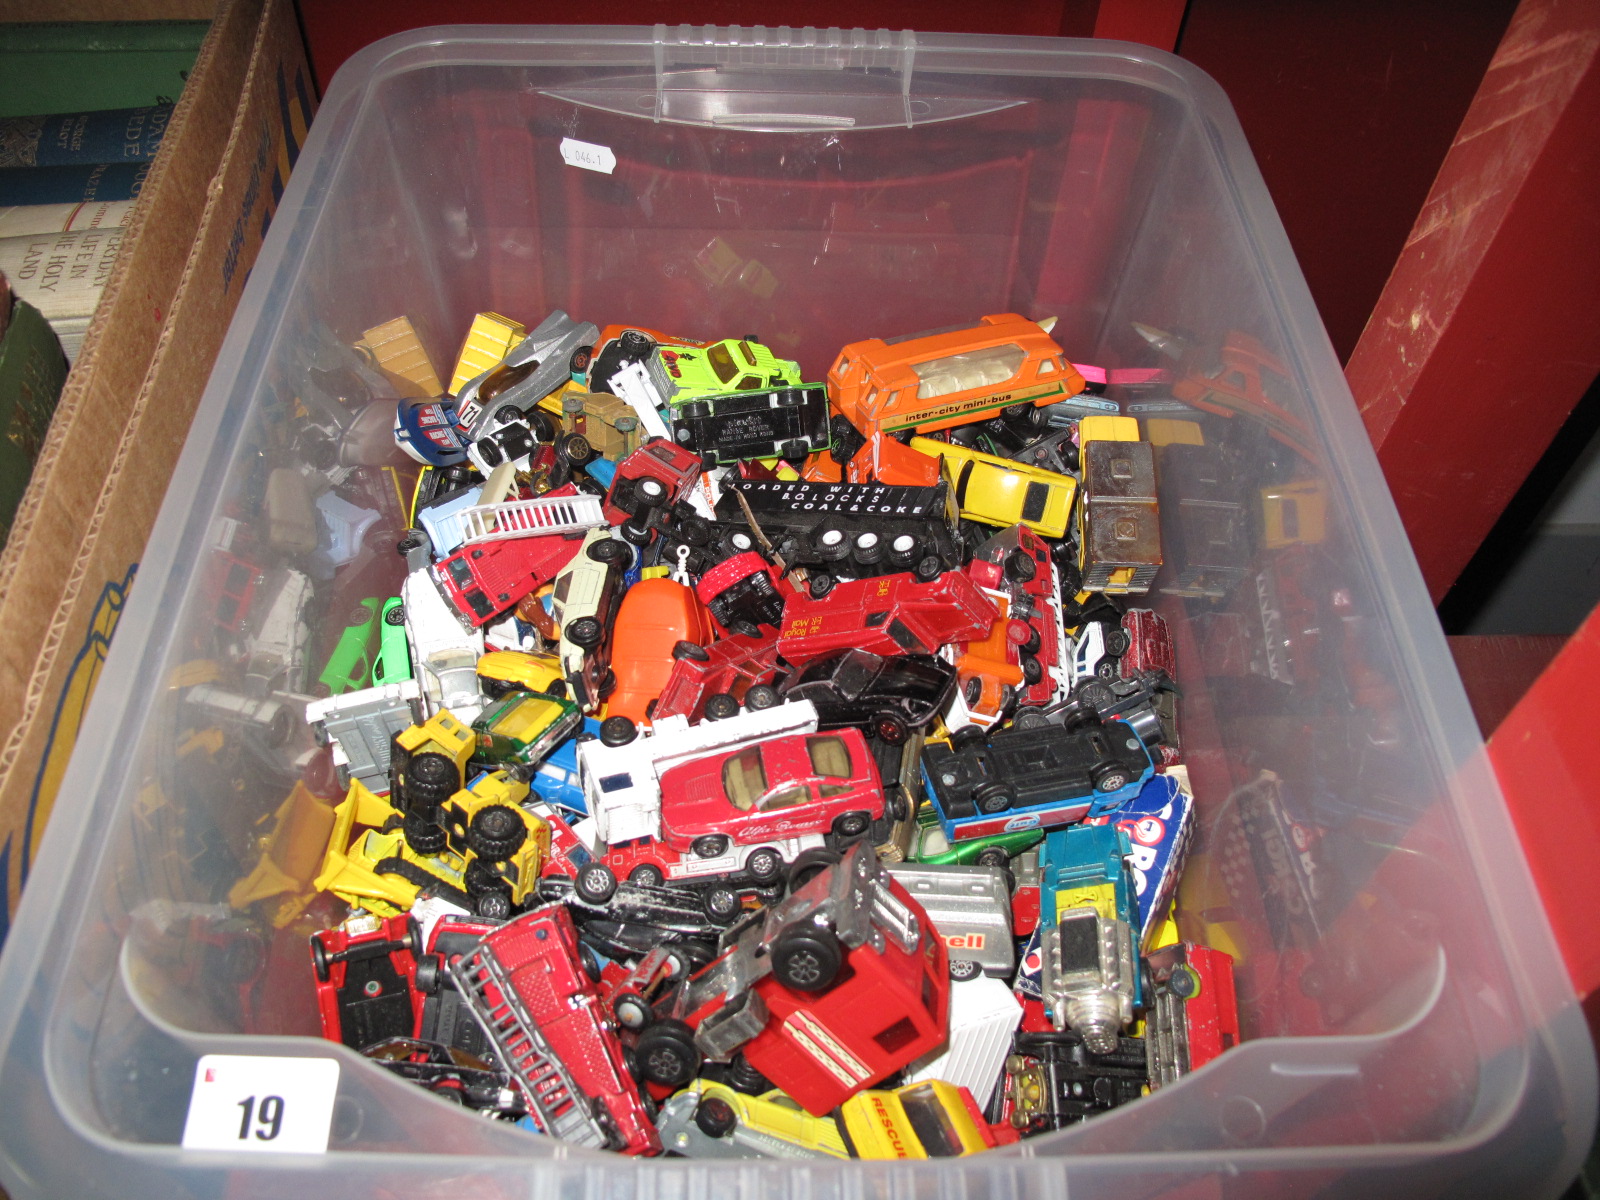 A Collection of Over 100 Playworn Diecast Vehicles, including Matchbox, Corgi, Majorette, etc:-